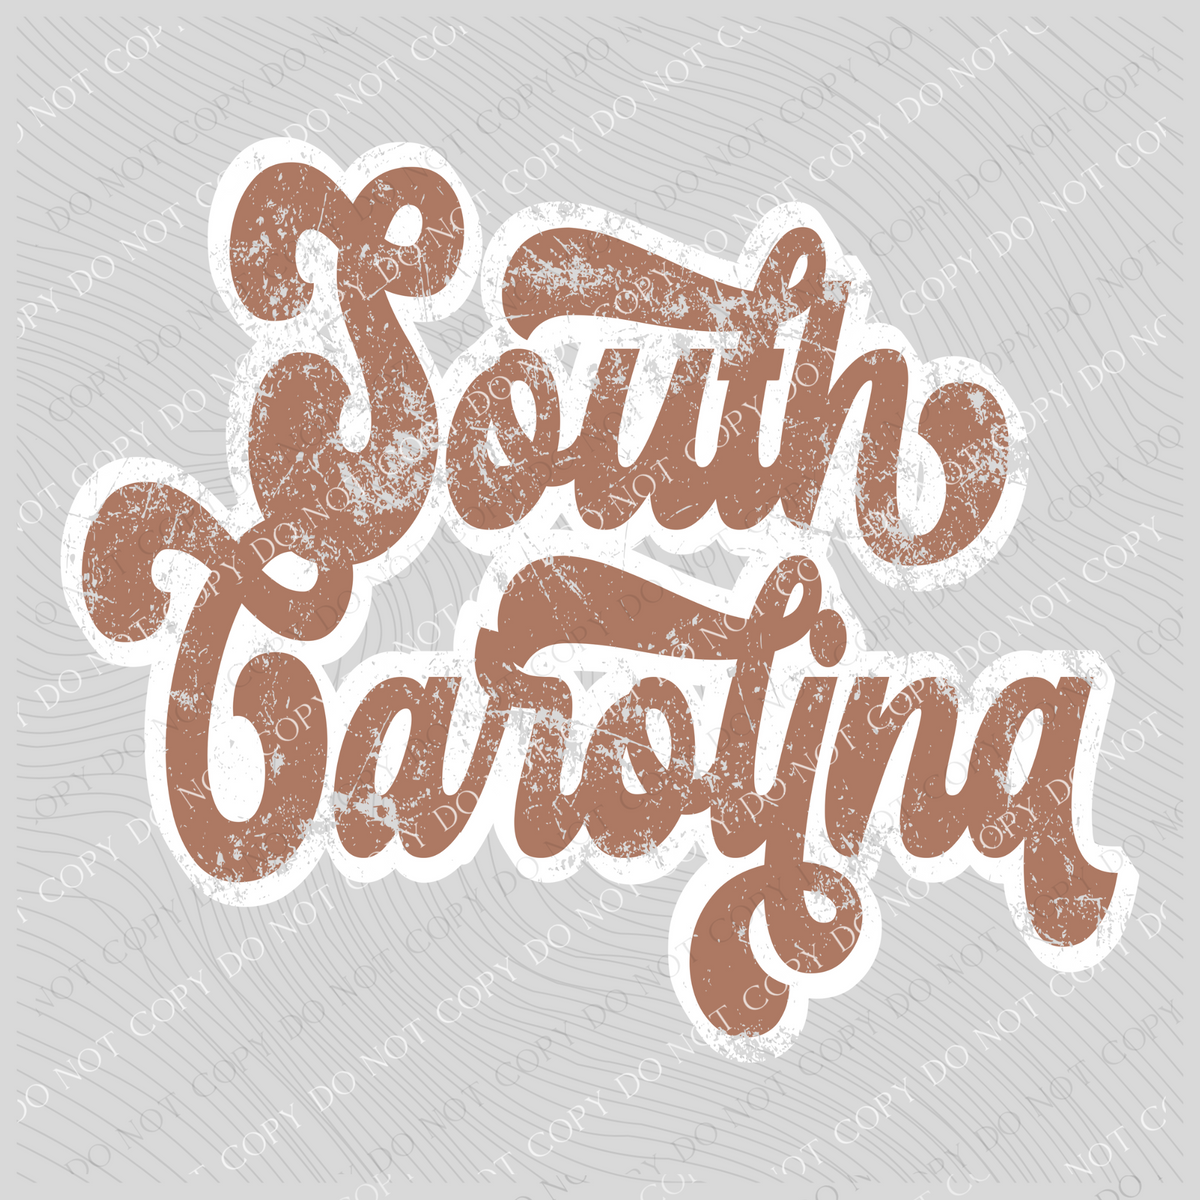 South Carolina Chestnut & White Retro Shadow Distressed Digital Download, PNG